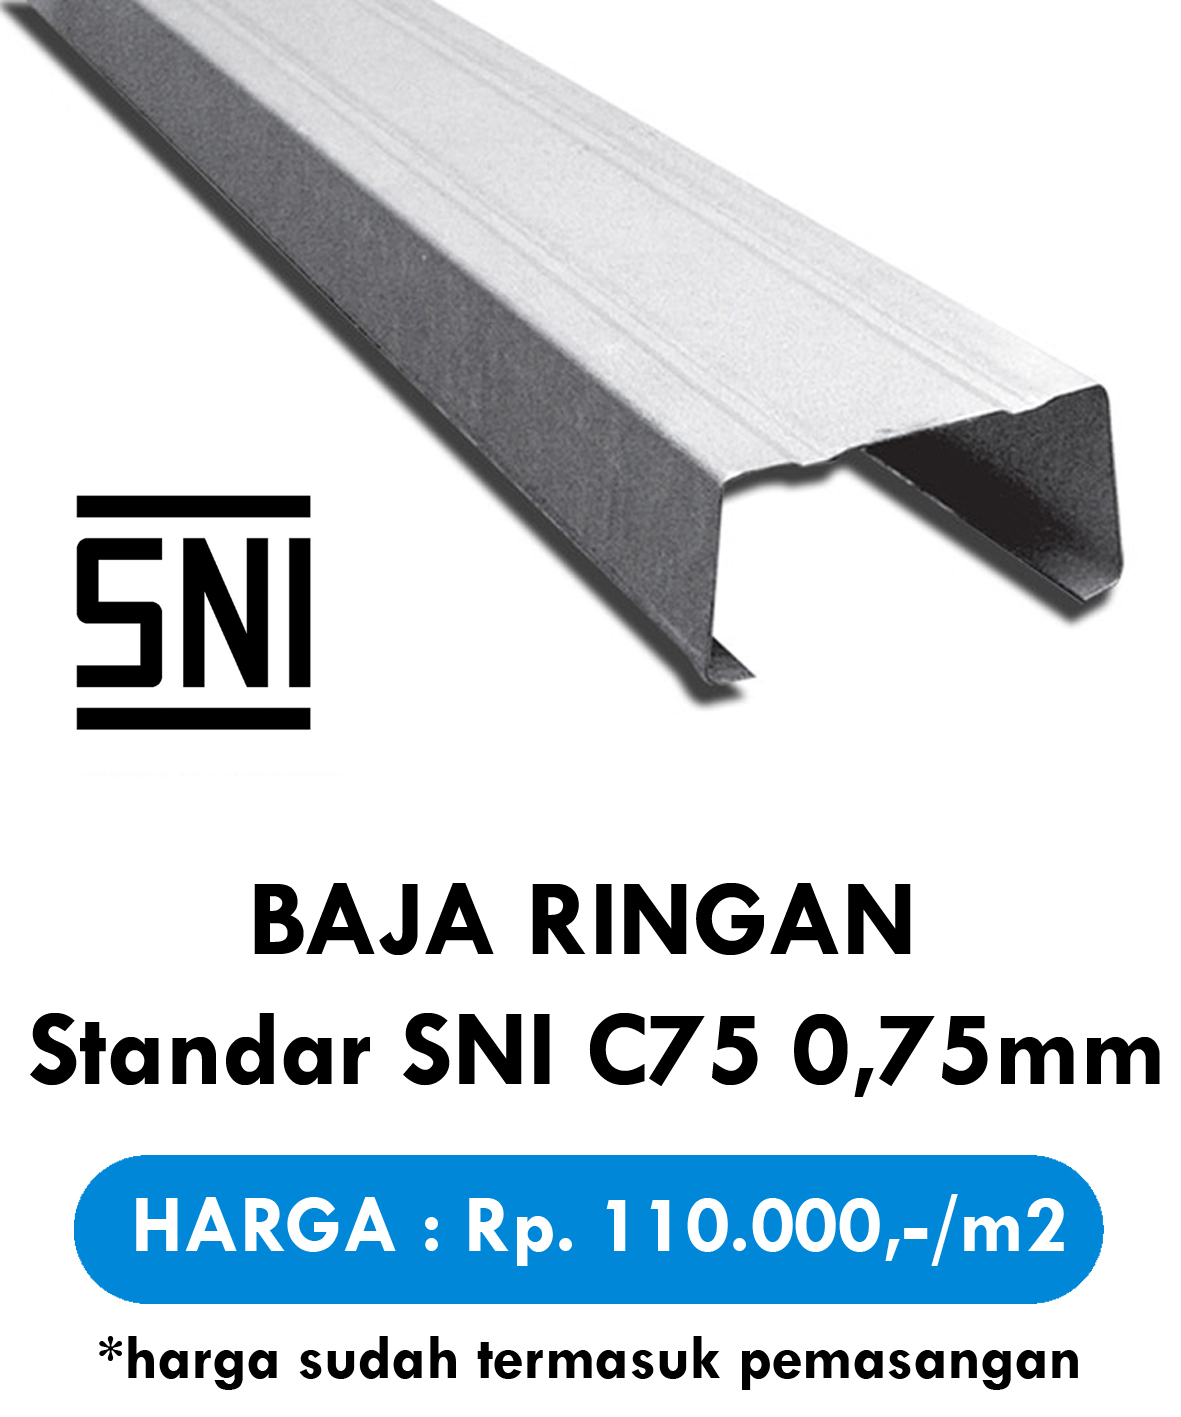 BR Standar SNI C75 0 75mm shs bajaringan